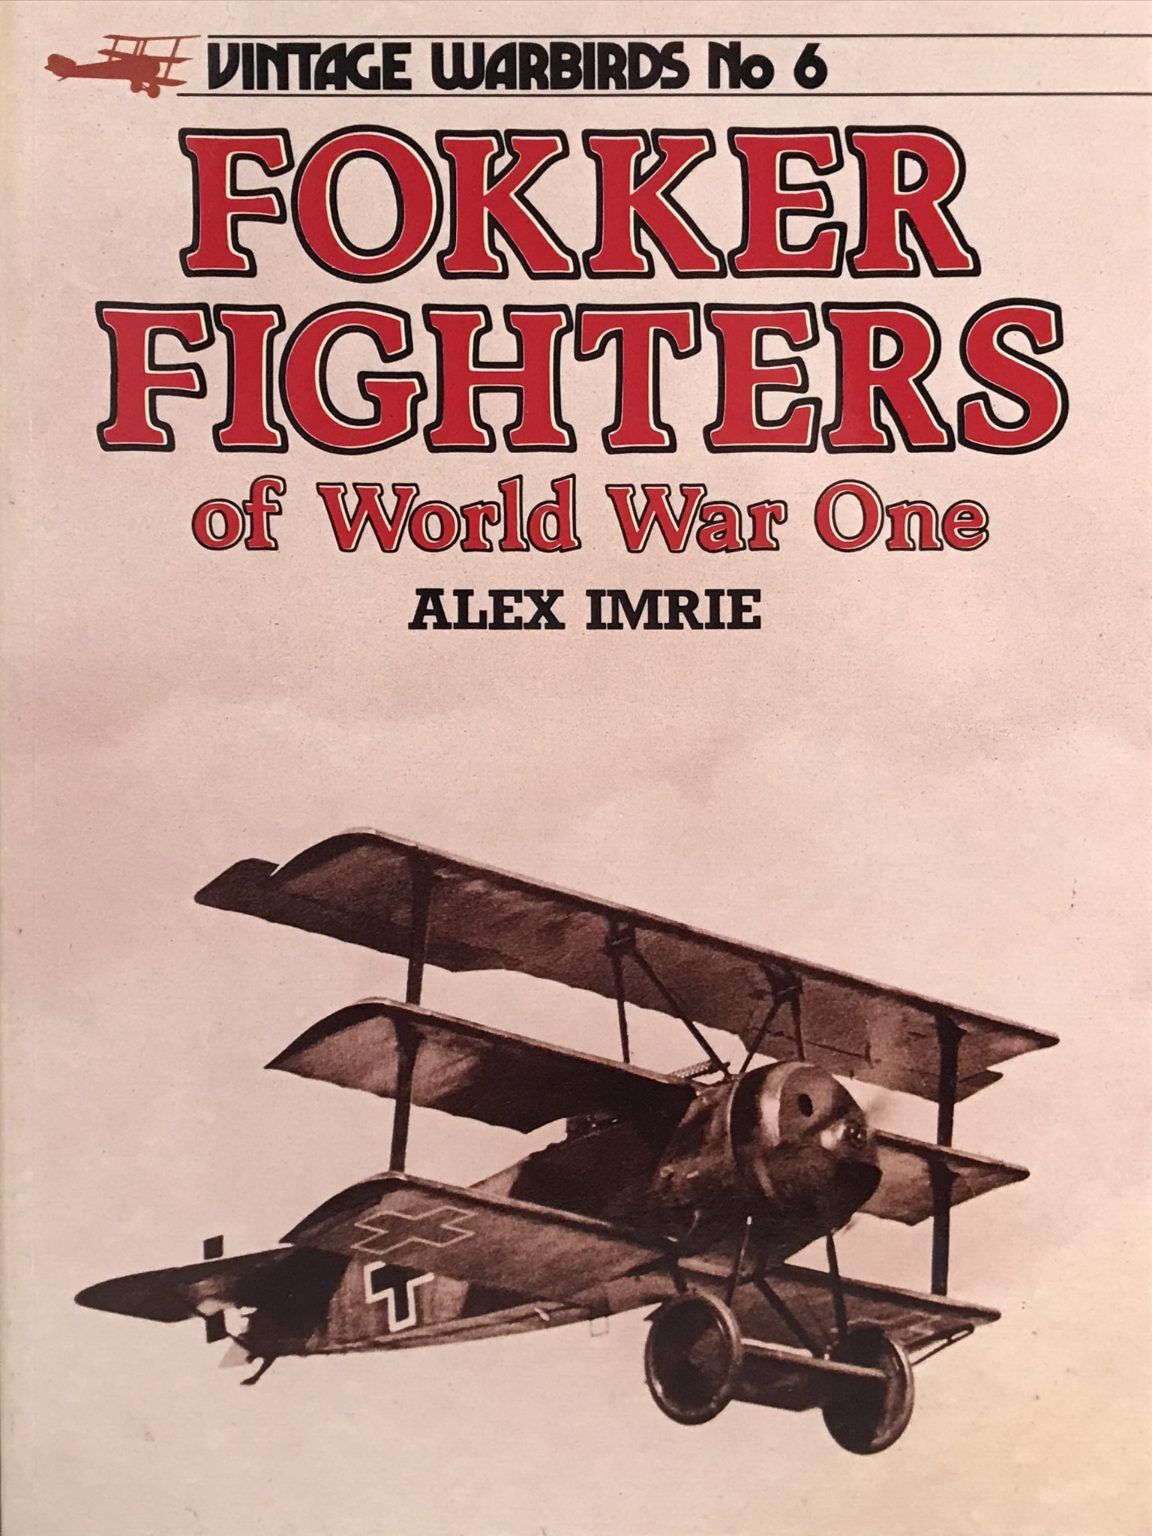 FOKKER FIGHTERS of World War One